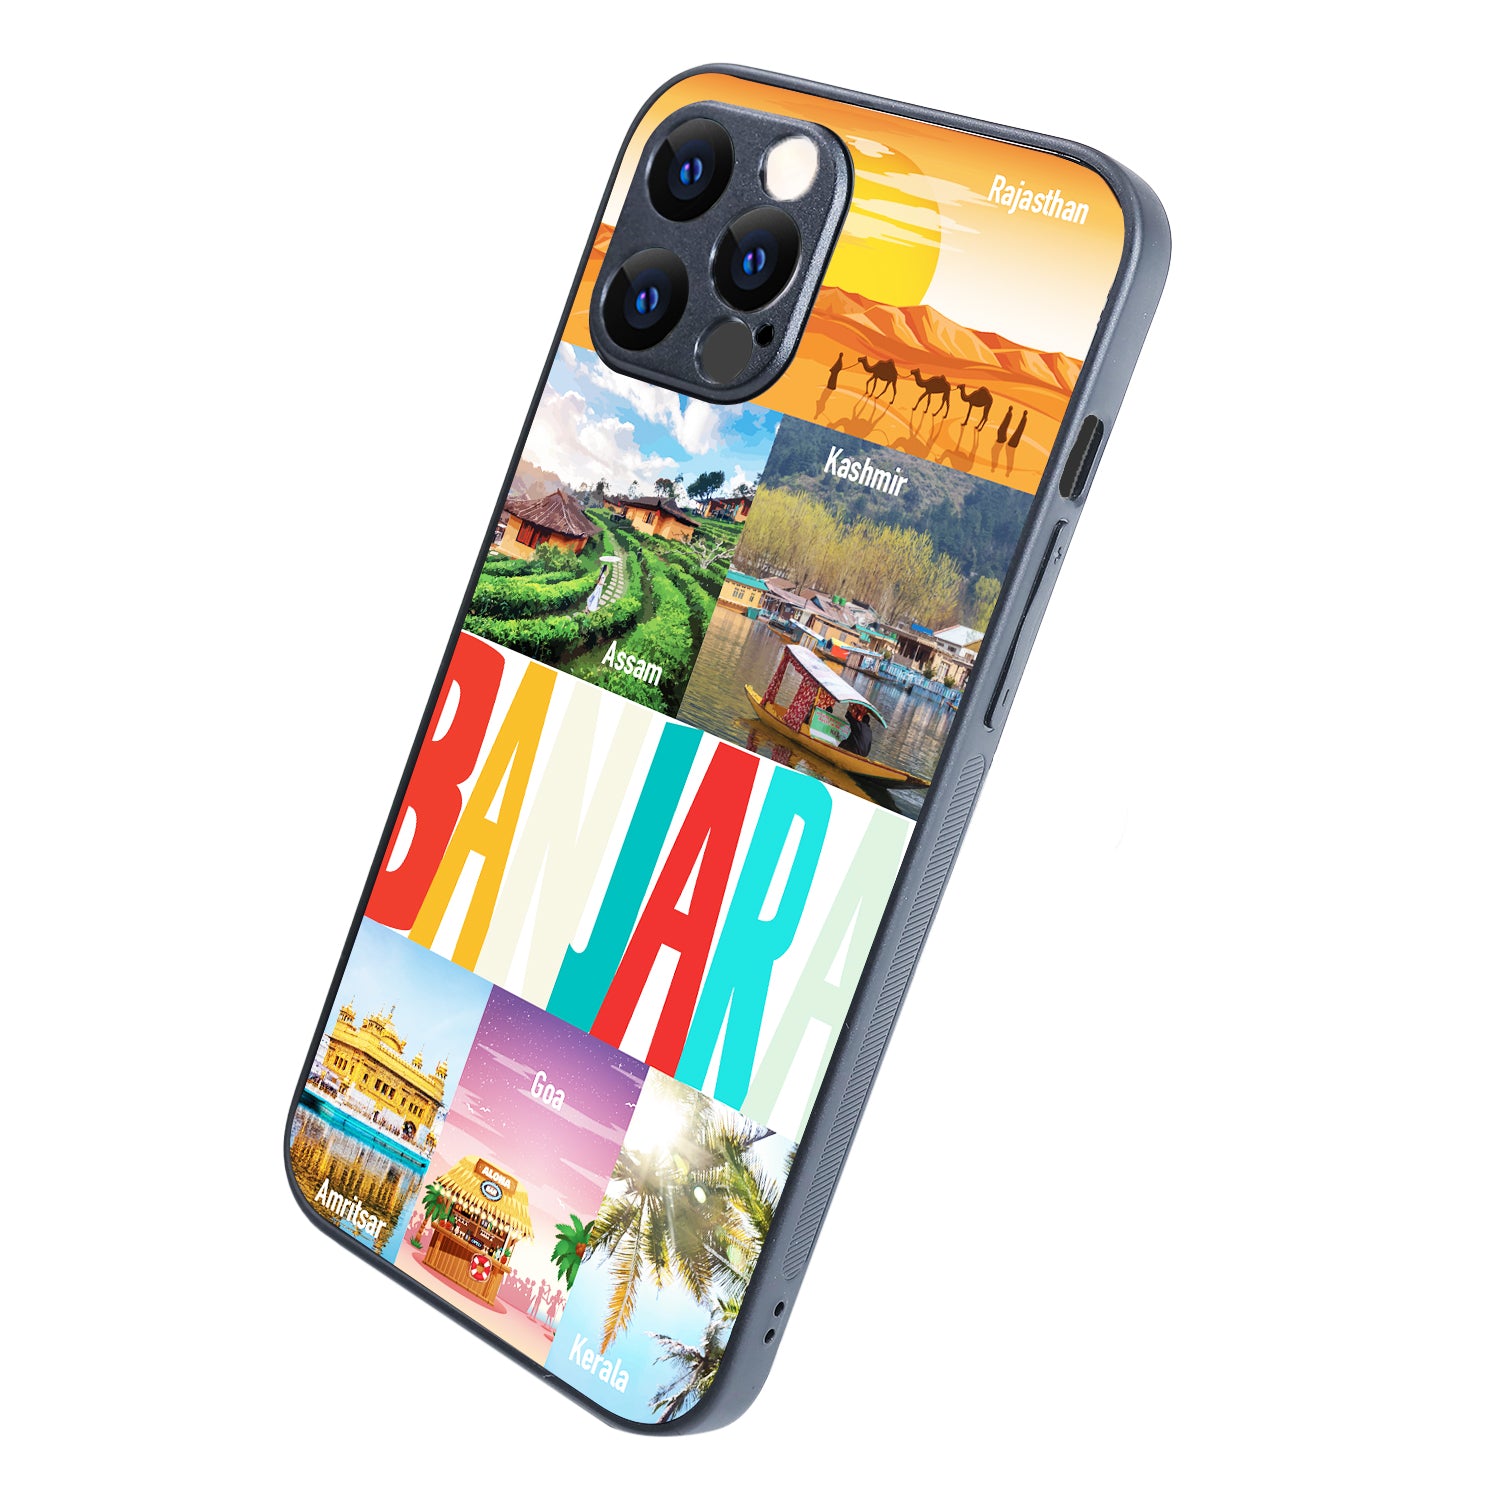 Banjara Travel iPhone 12 Pro Max Case